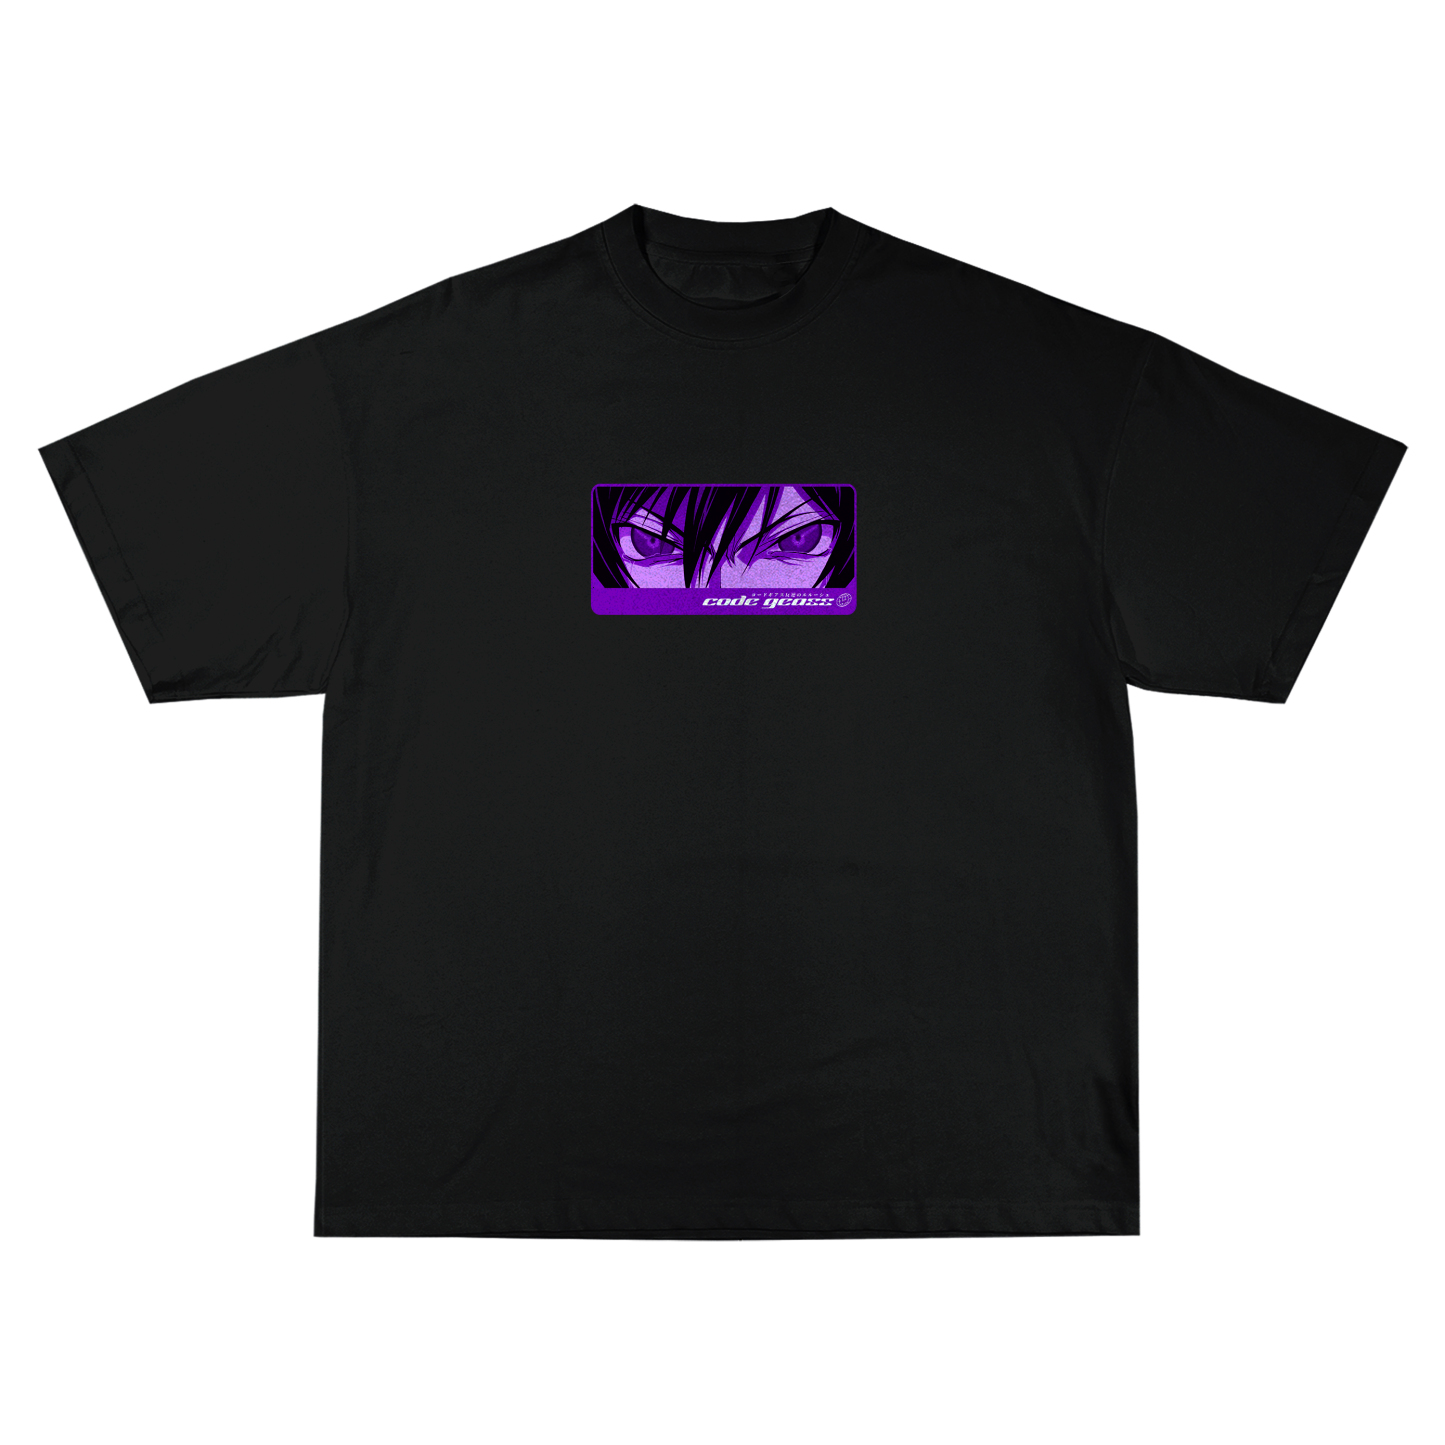 Lelouch Lamperouge Code Geass | T-Shirt